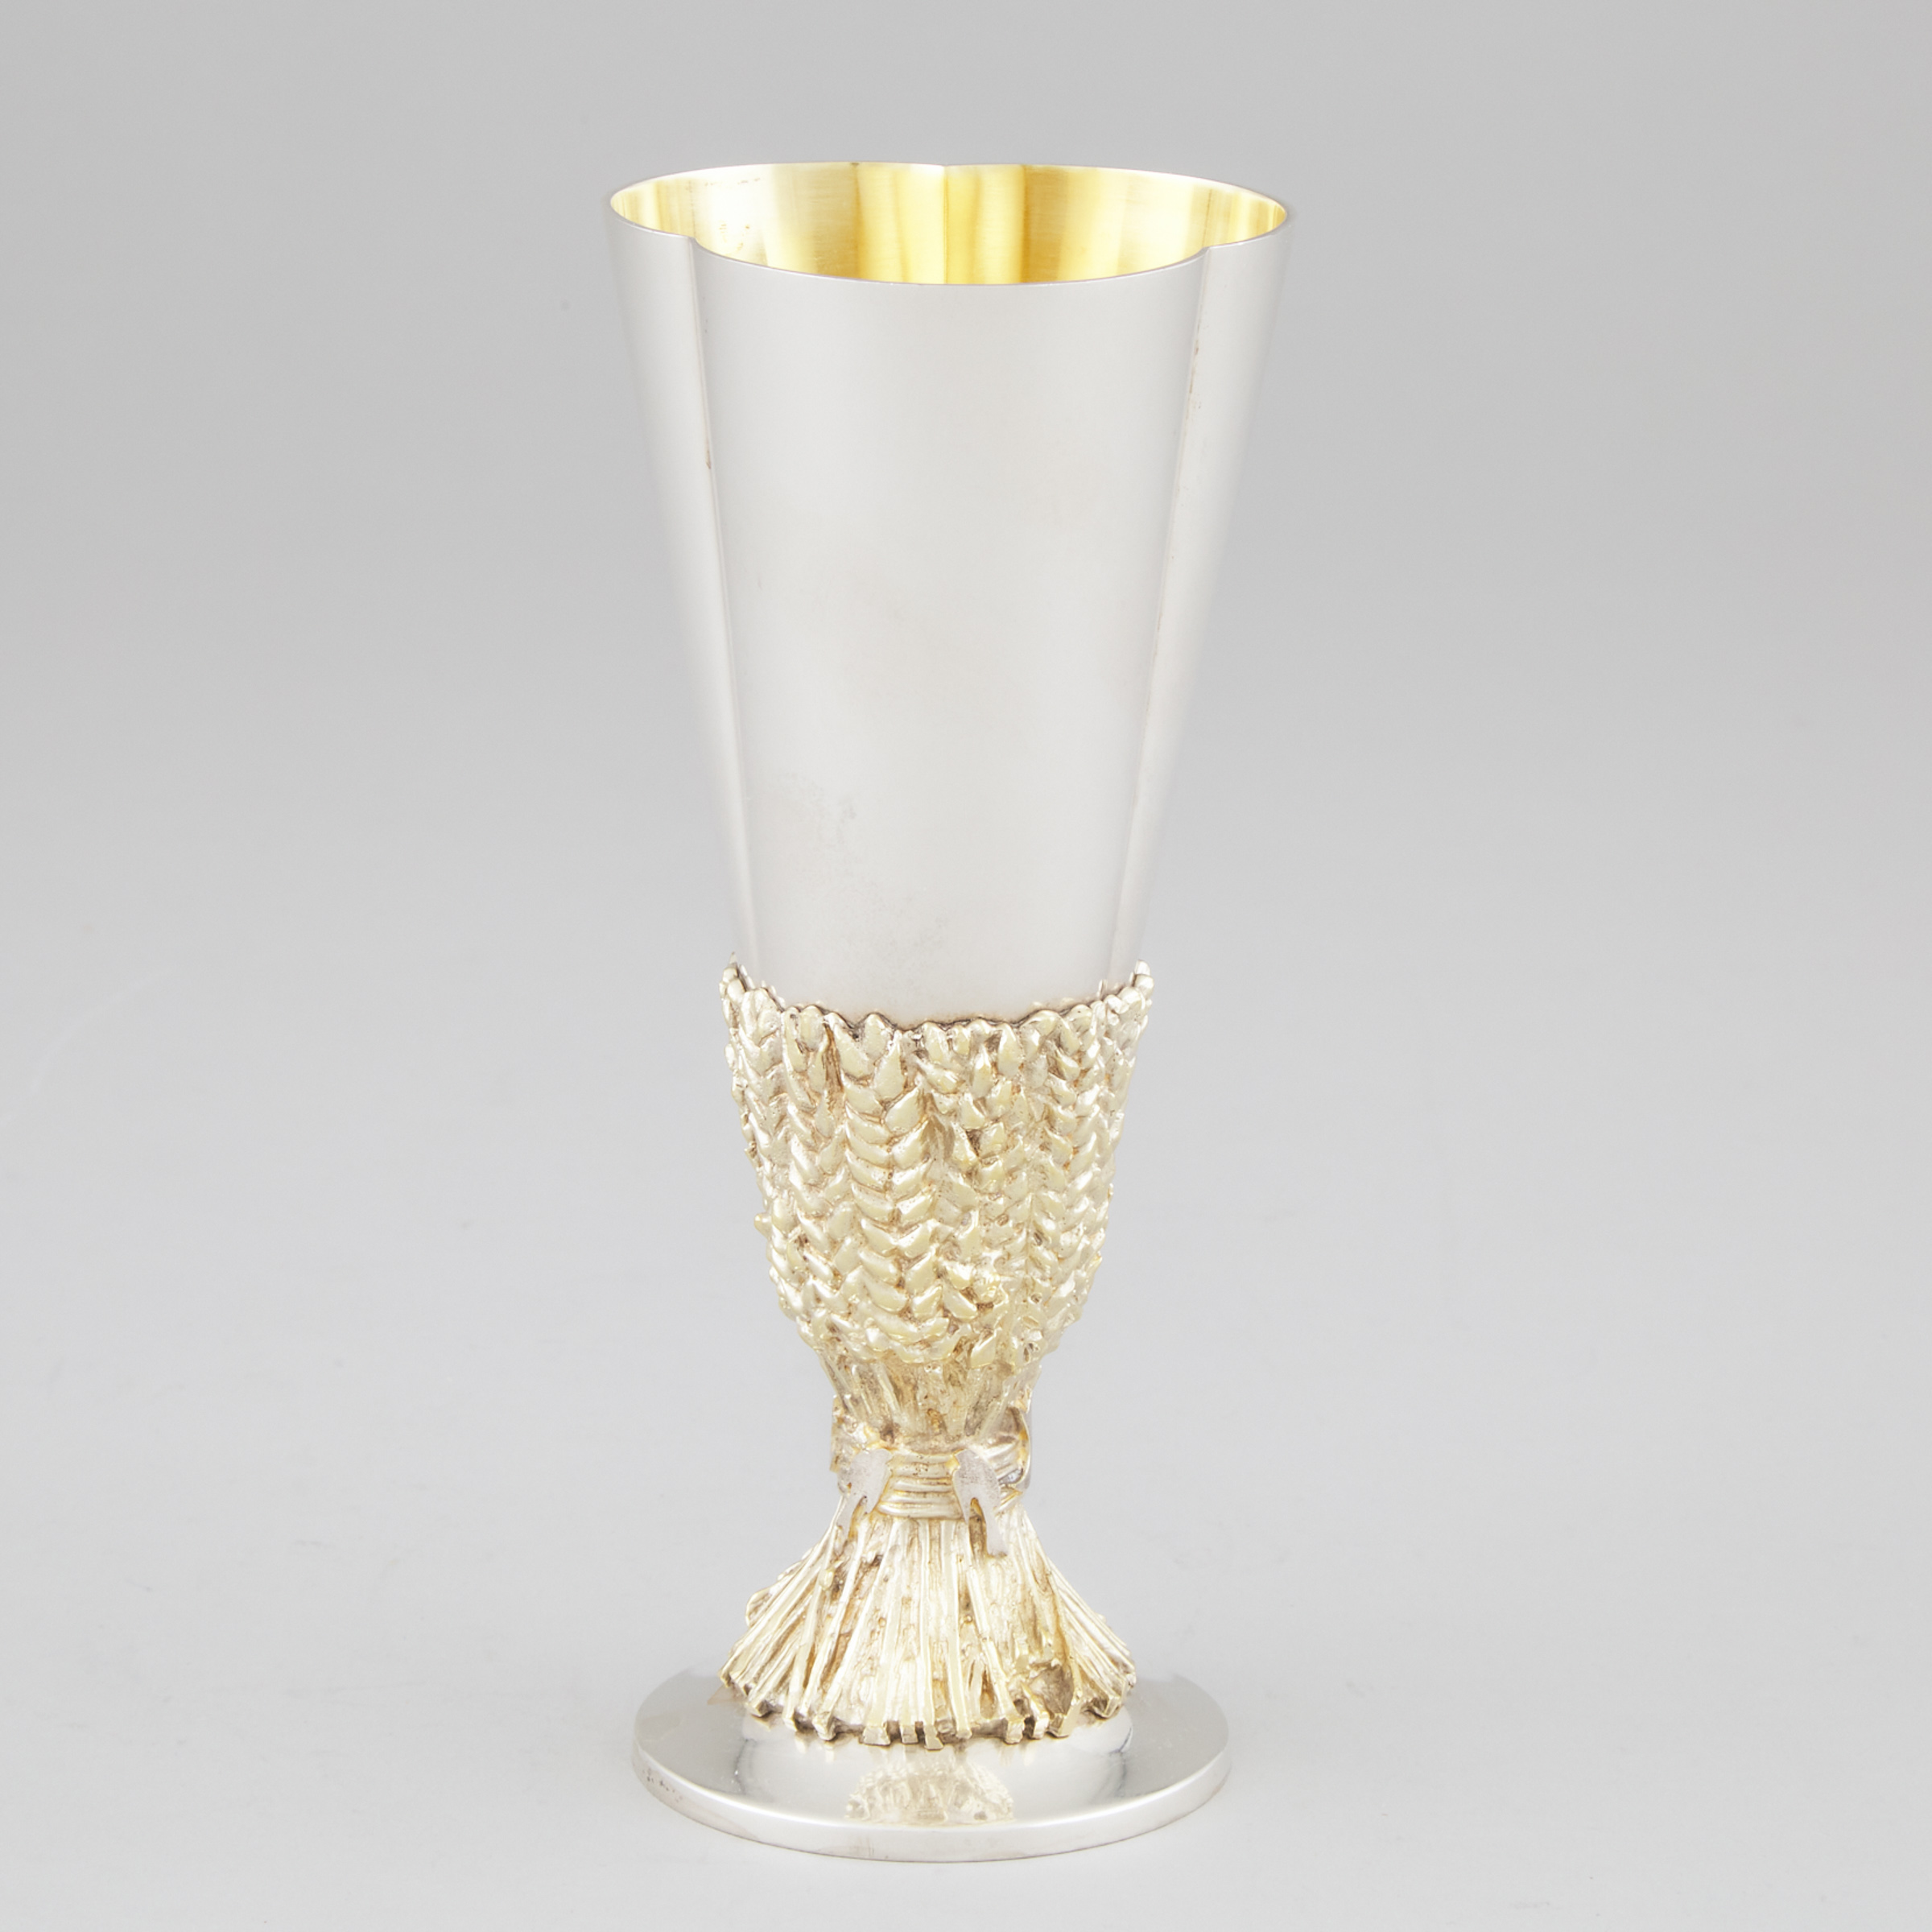 English Silver Parcel-Gilt Chichester Cathedral Nonacentennial Commemorative Goblet, 465/600, Desmond Clen-Murphy for Aurum Designs, London, 1976